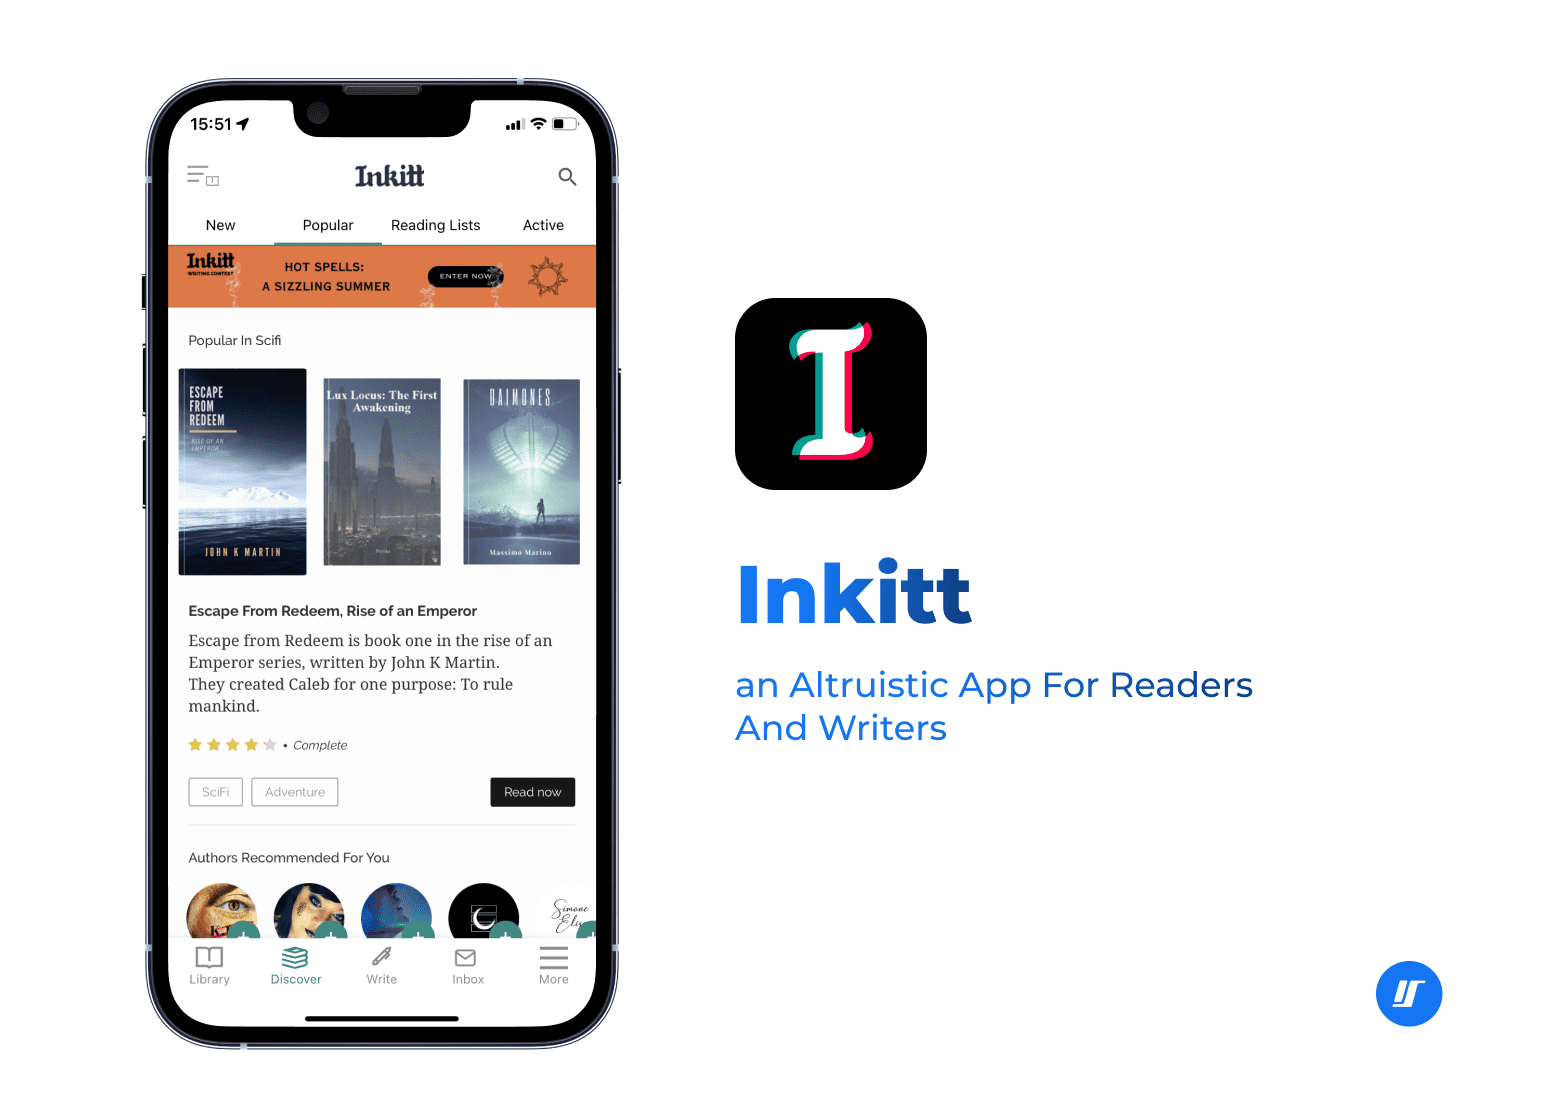 Inkitt app screenshot on the iPhone screen